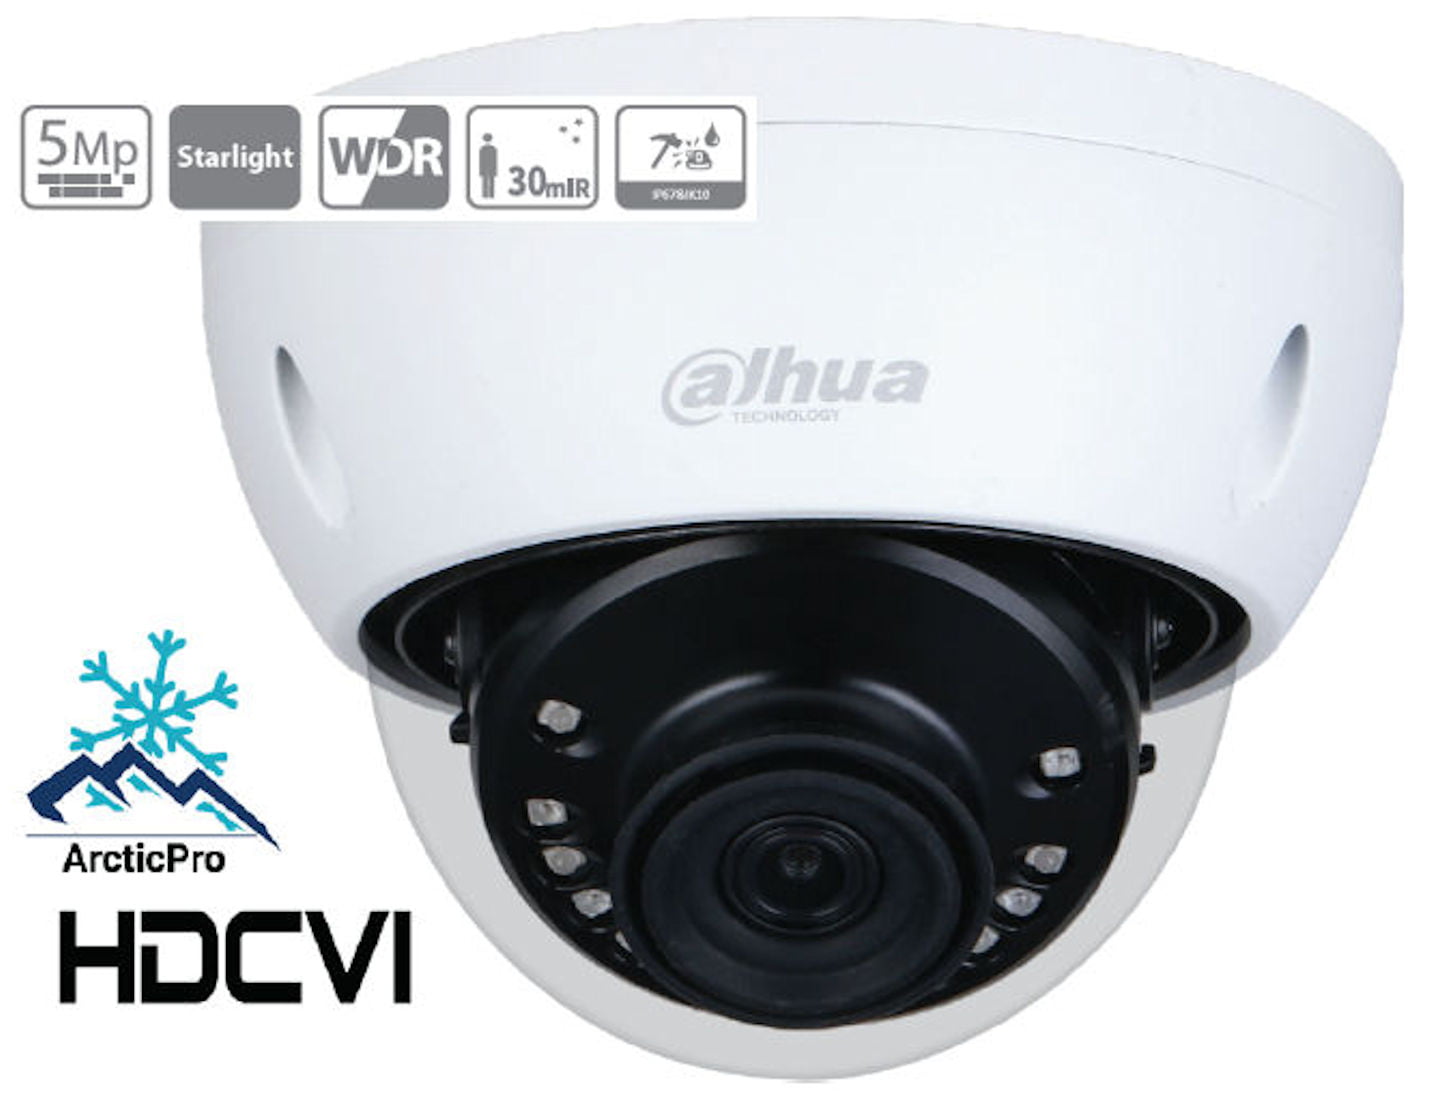 Dahua A52BL62 2880 x 1620 MAX Resolution BNC 5MP IR 2.8mm HDCVI Dome with 16:9